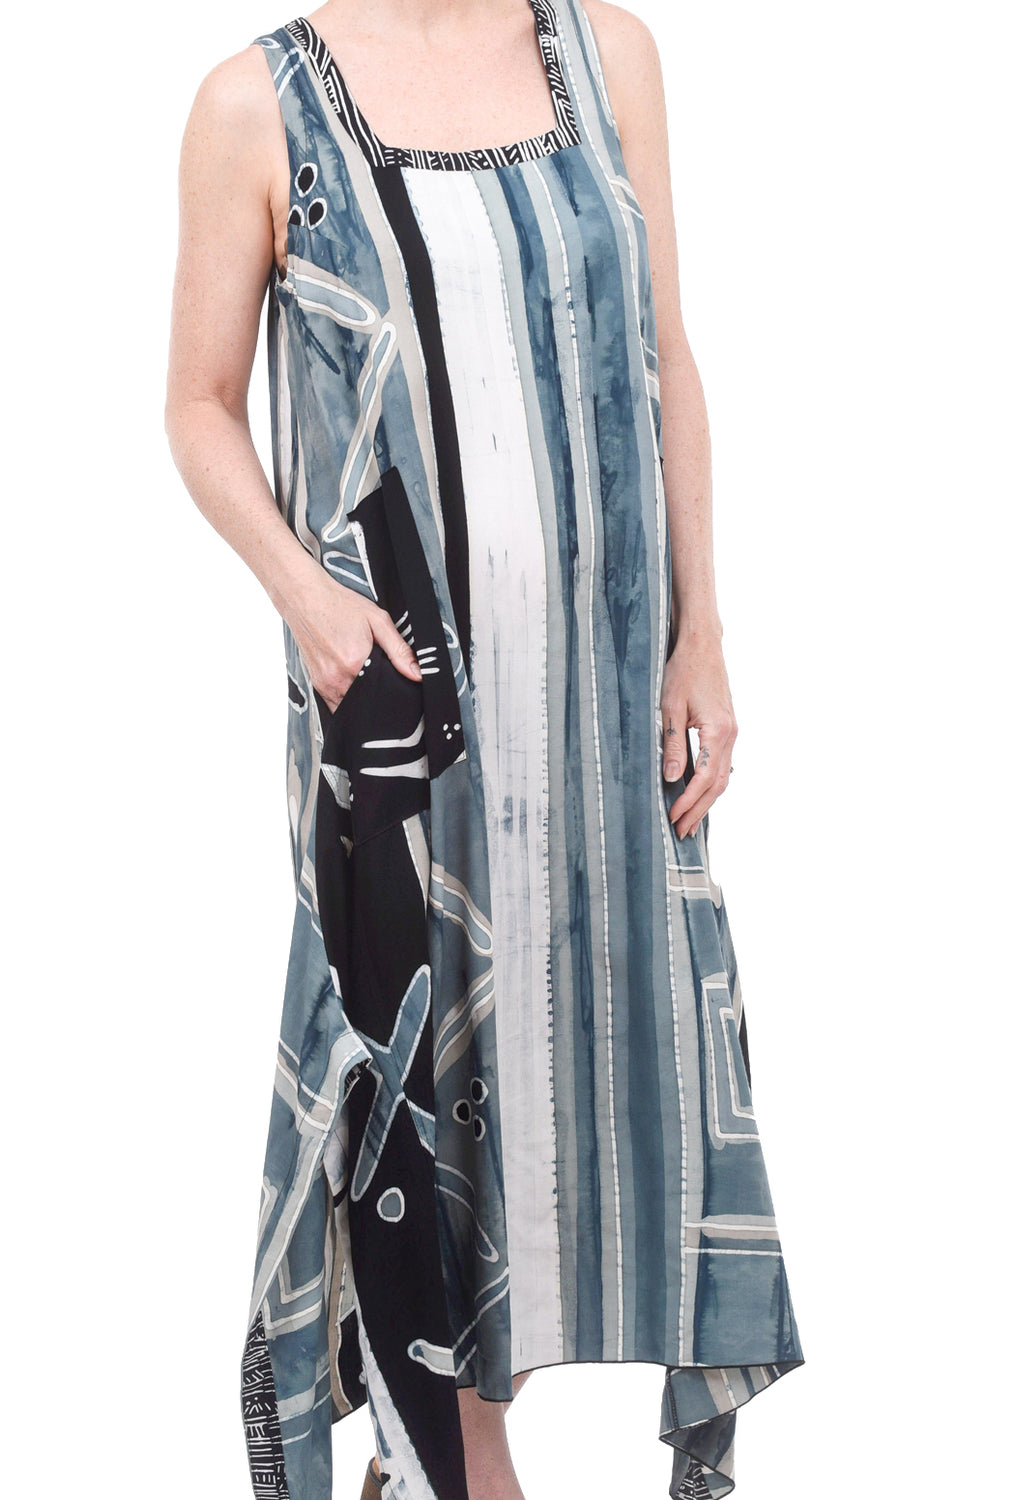 Maria Batik Dress, Wind